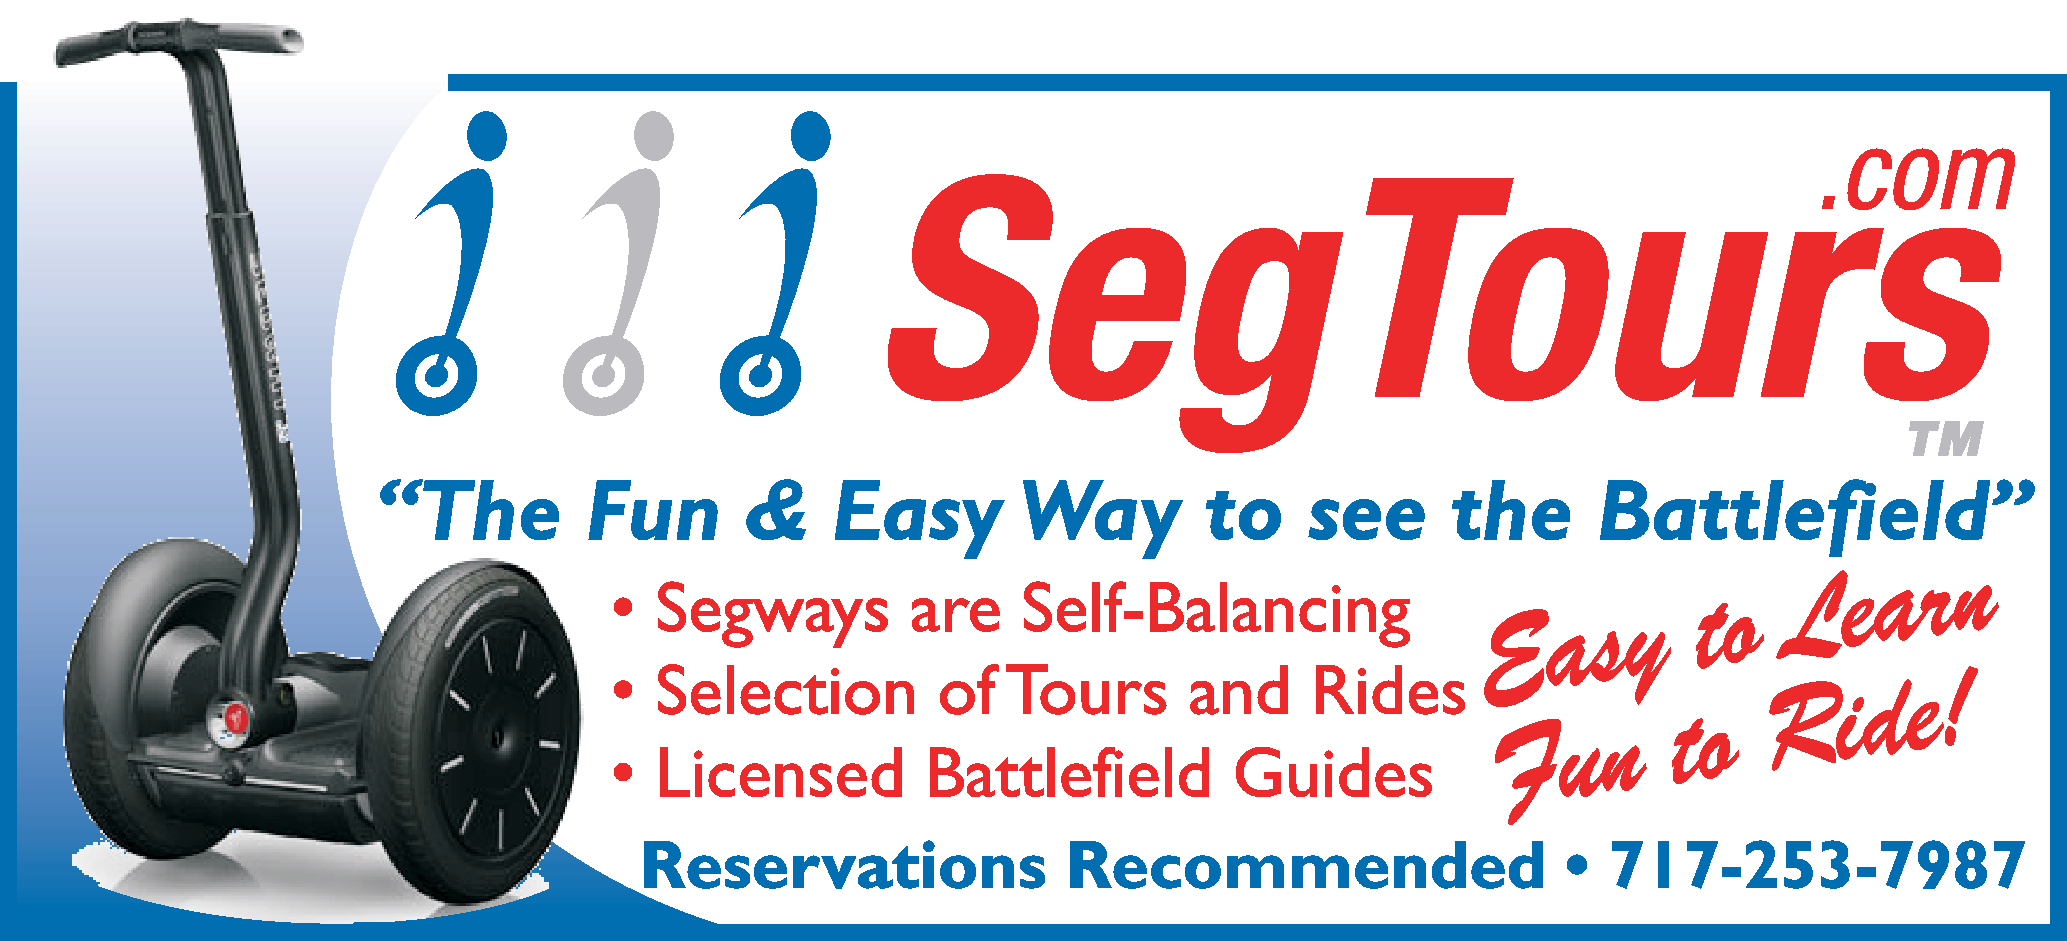 SegTours Print Ad